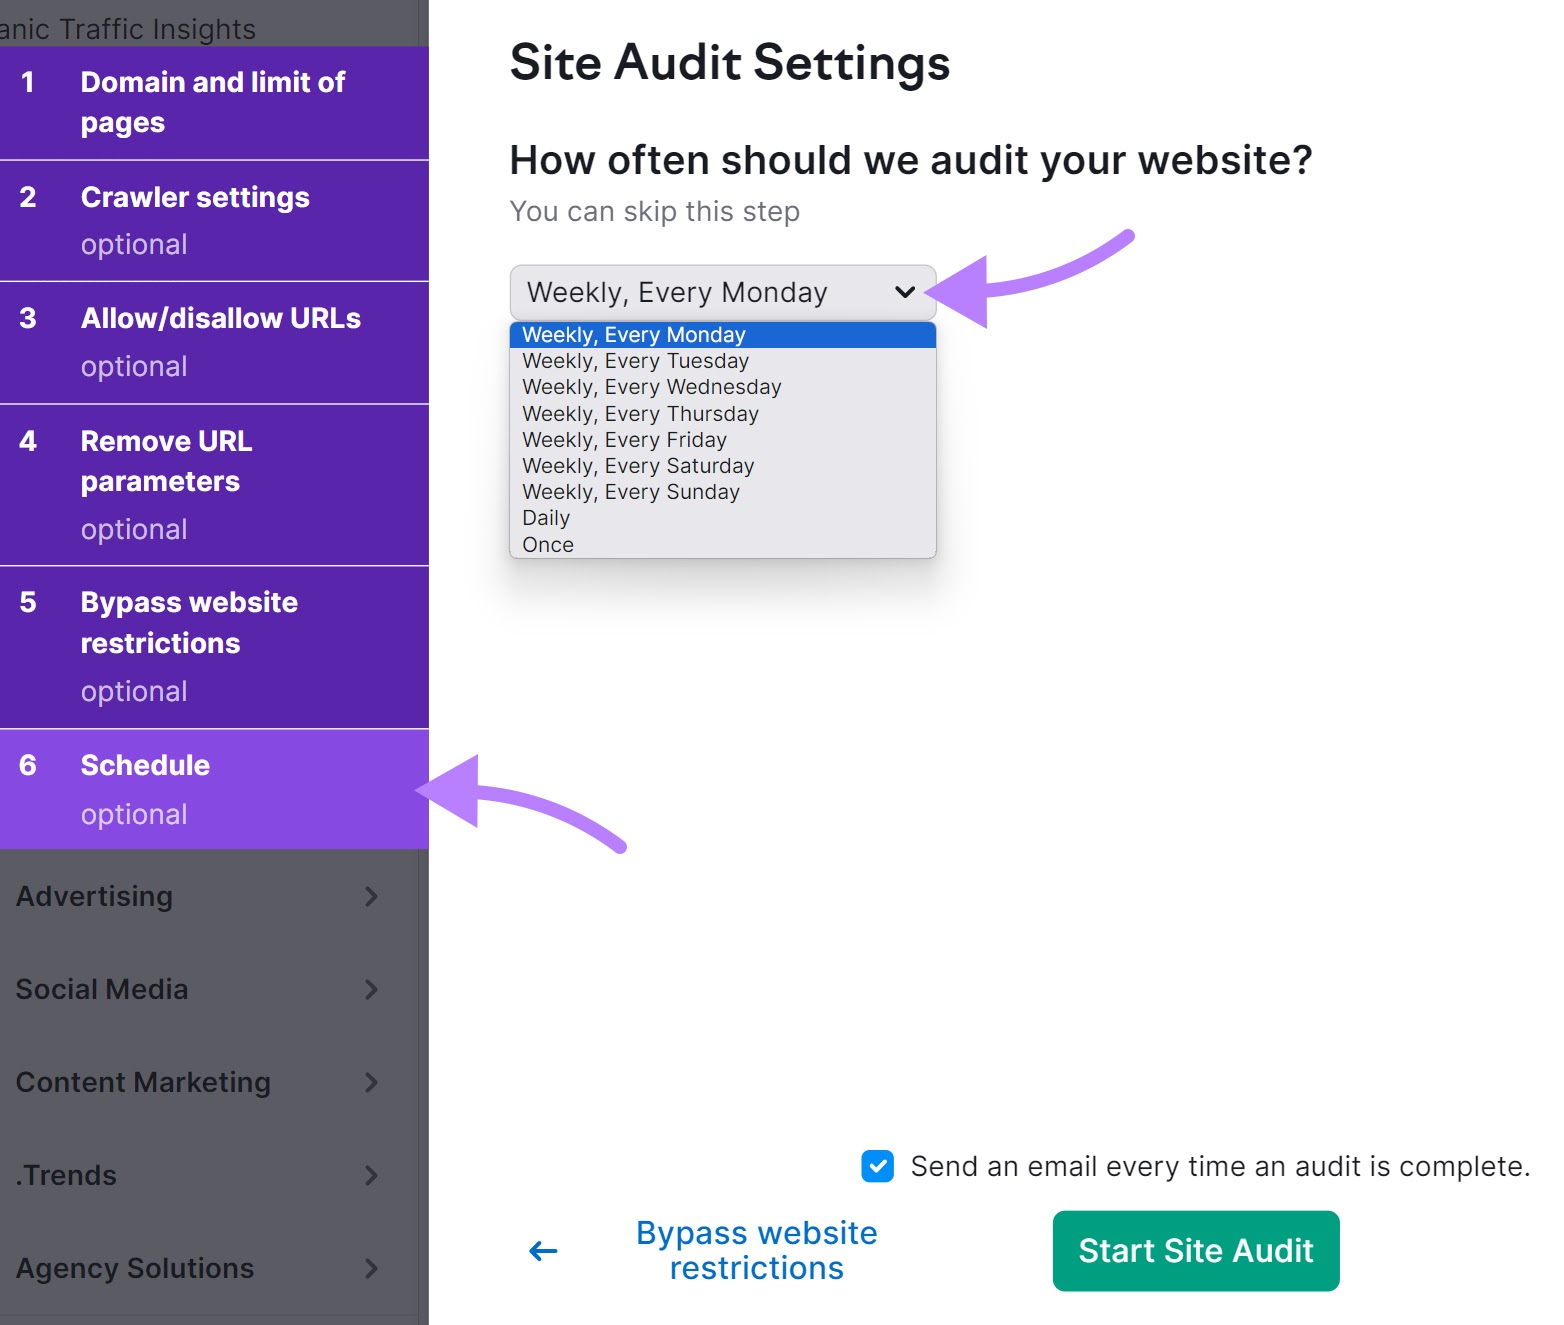 "How often should we audit your website?" window in Site Audit Settings